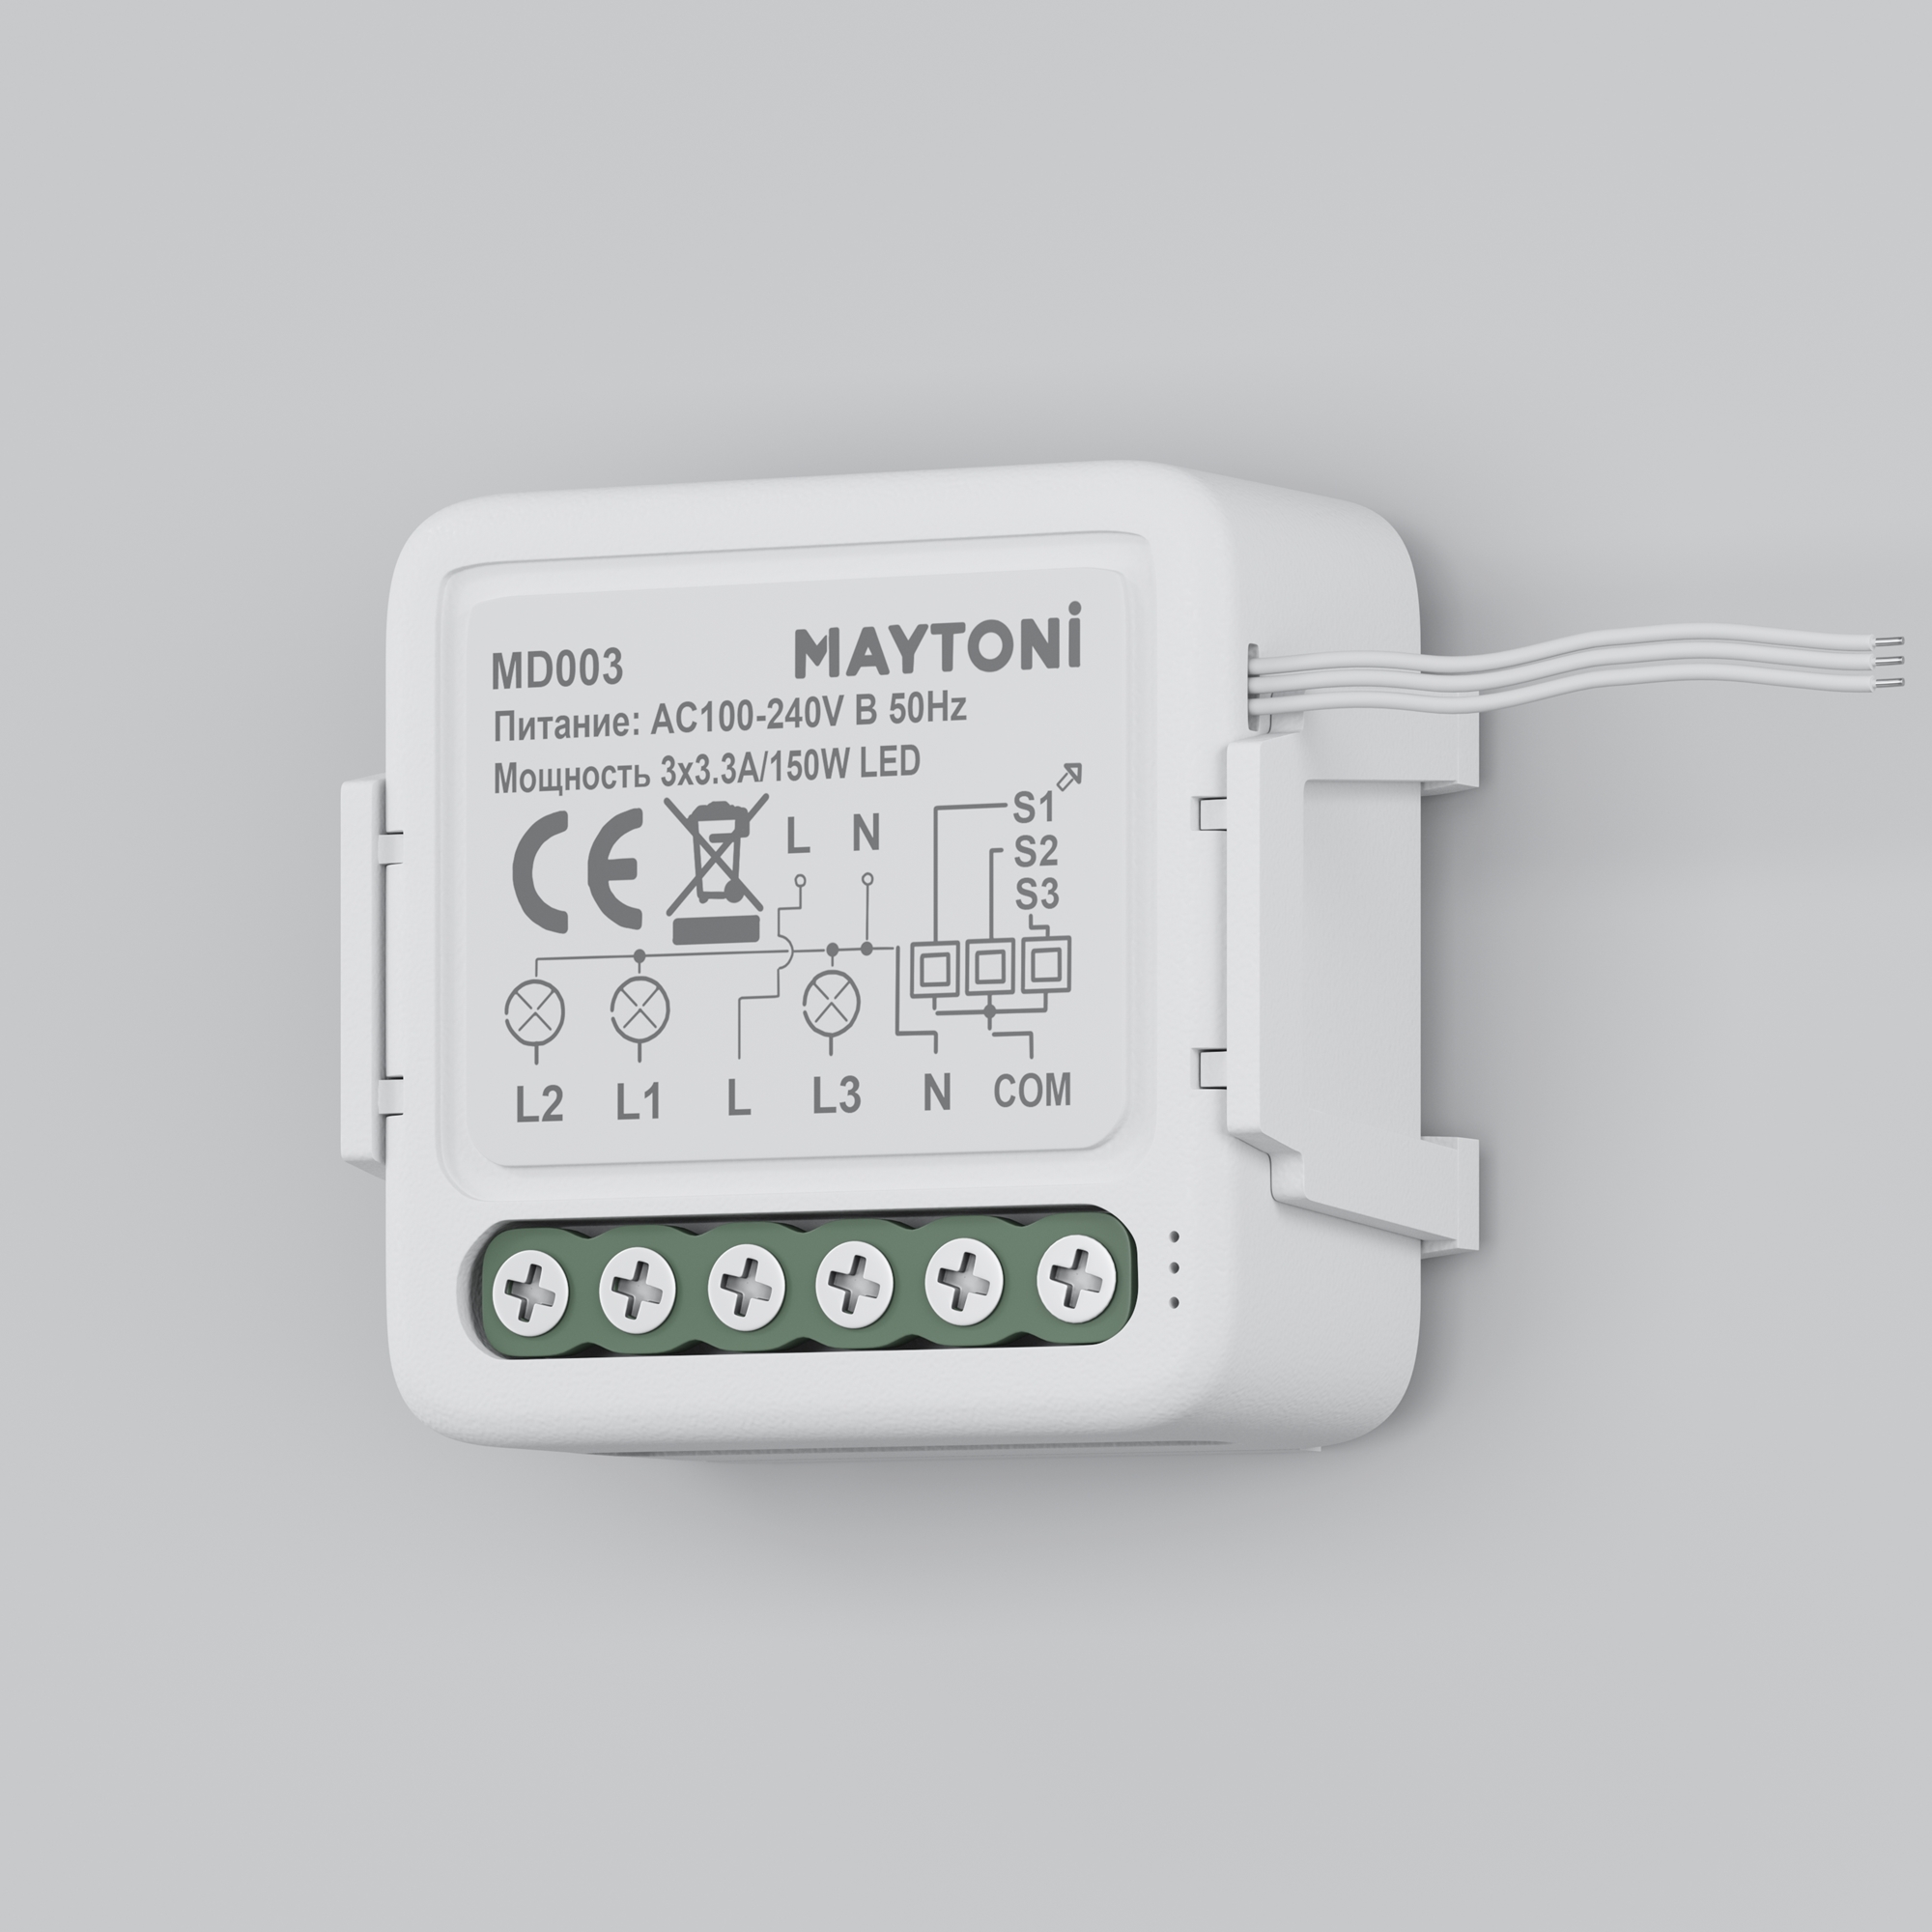 Реле Wi-Fi Maytoni MD003, цвет белый - фото 4